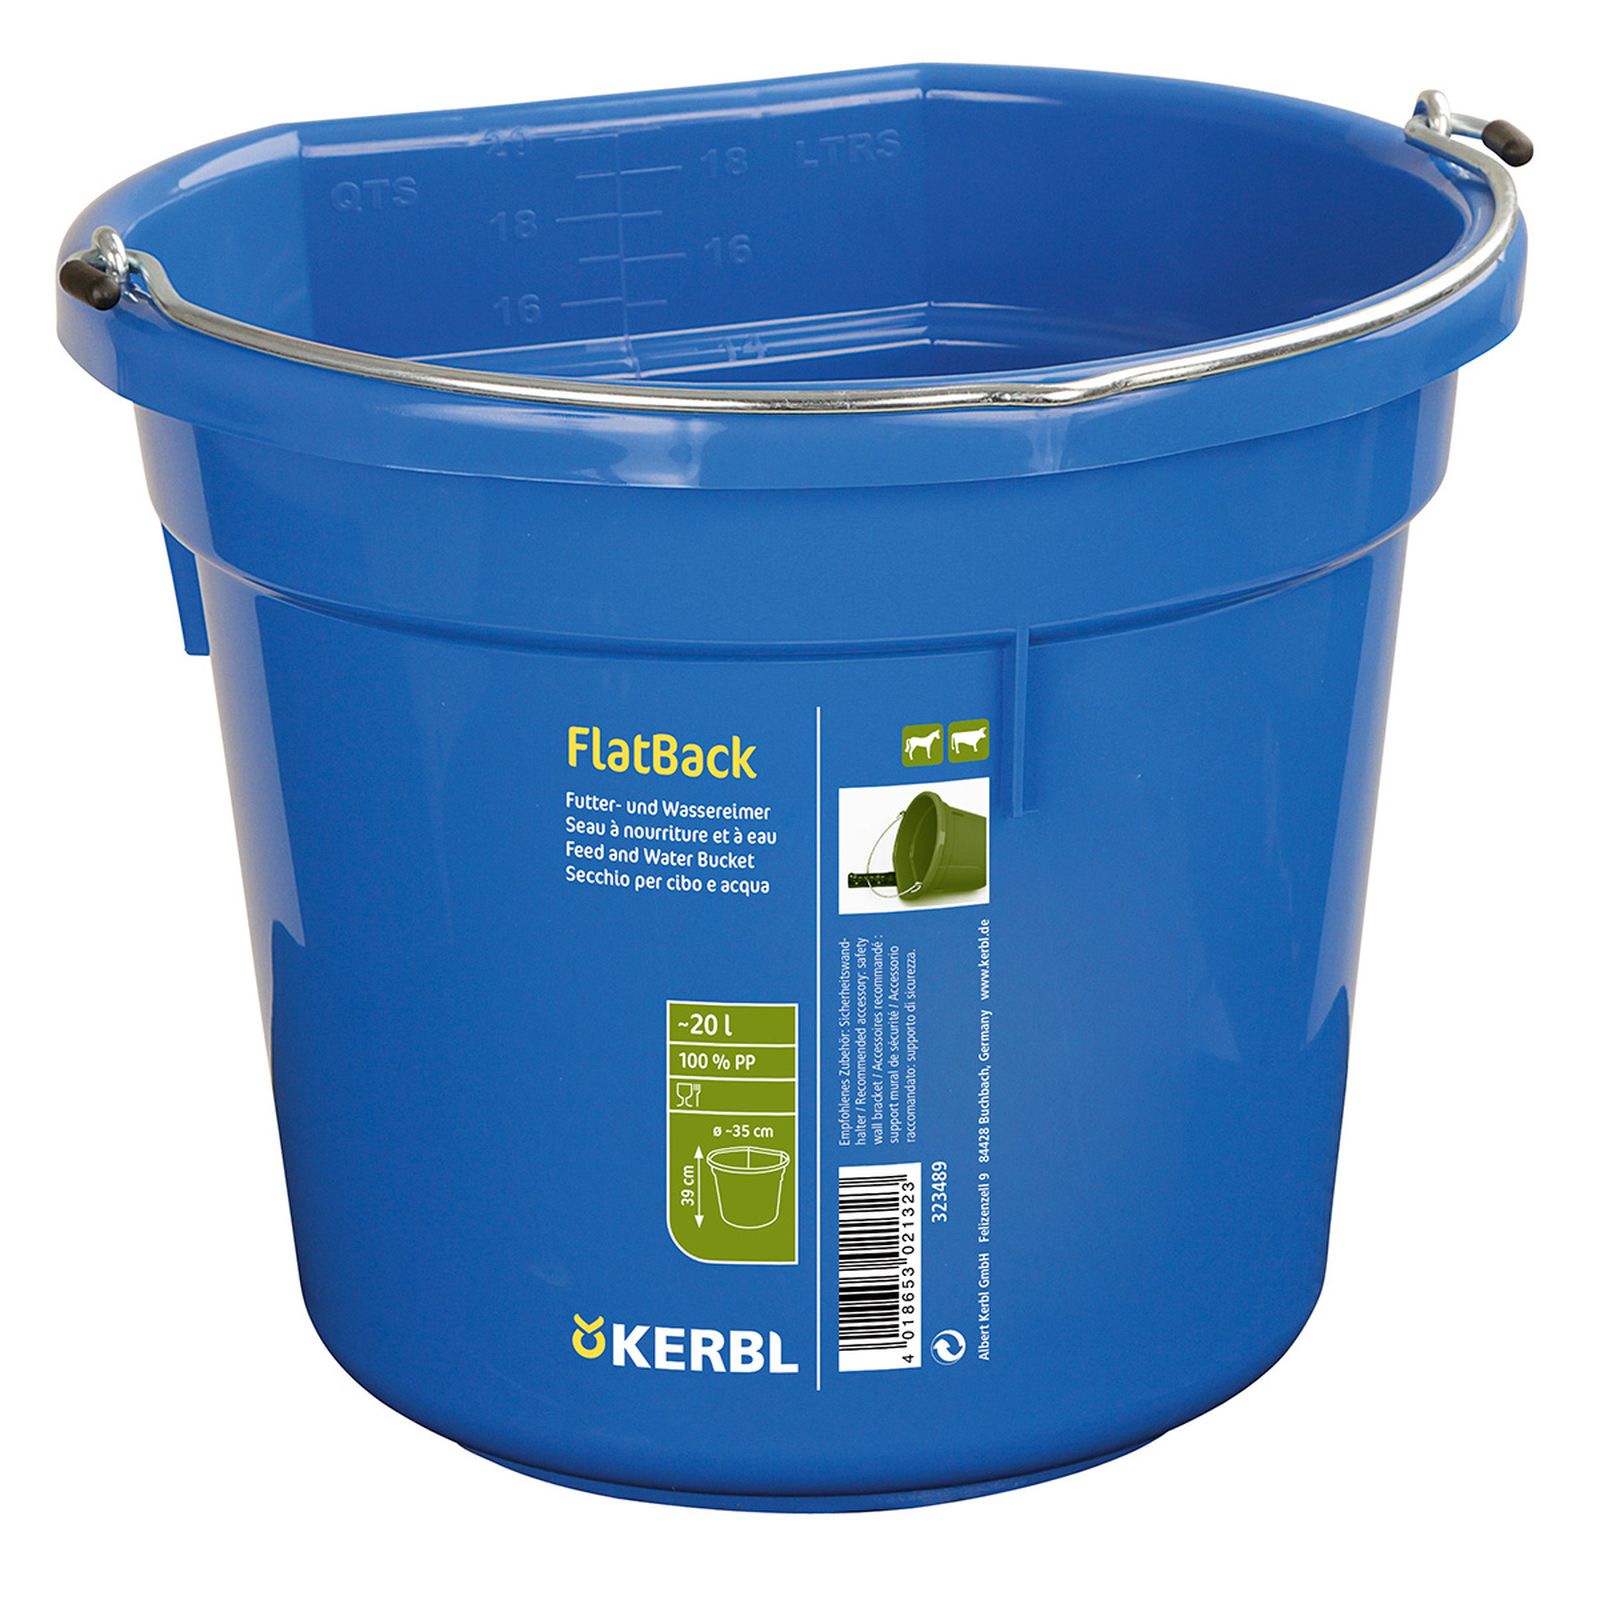 Kerbl Feed and water bucket FlatBack ca. 20L